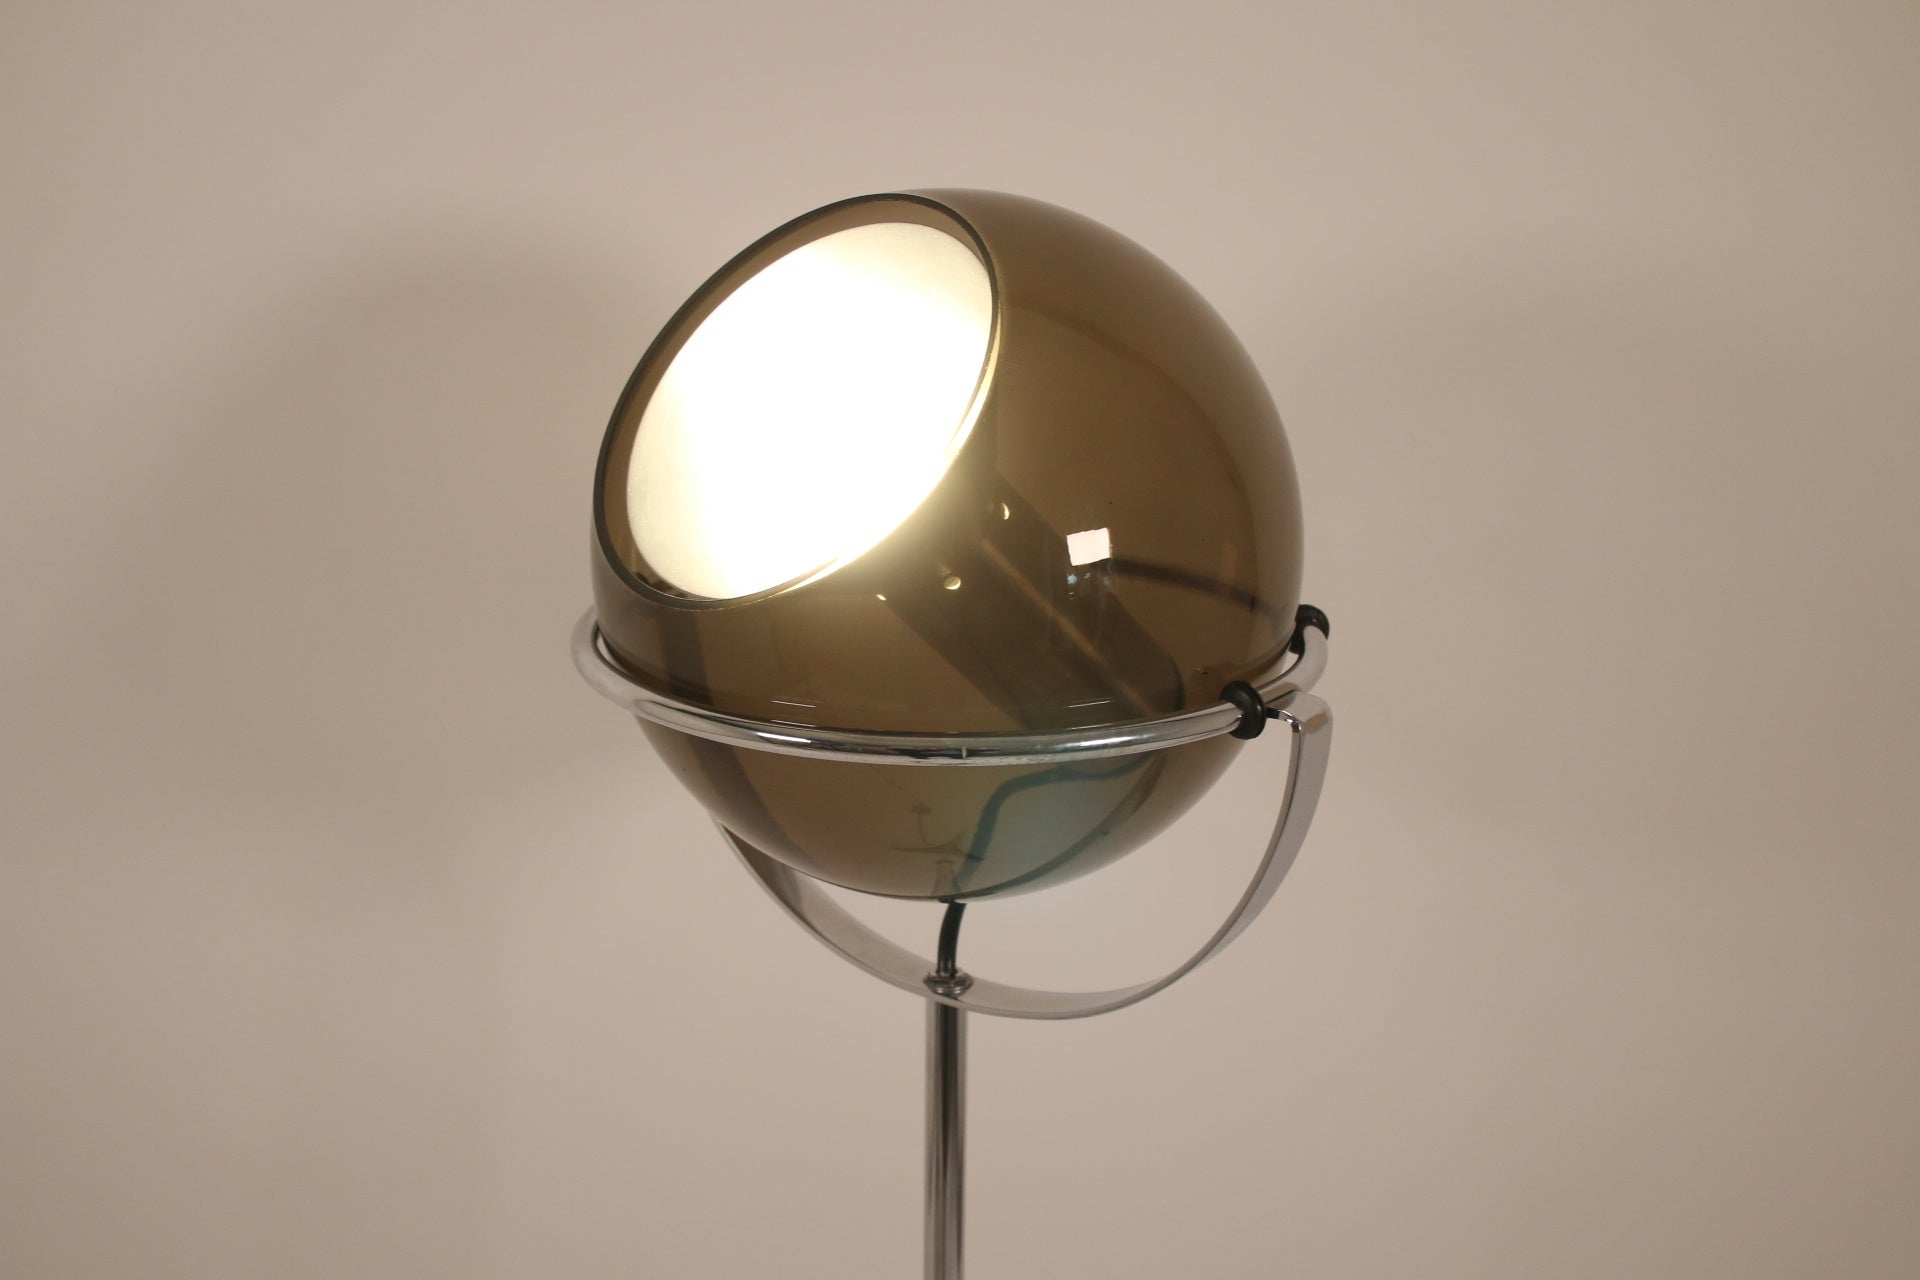 RAAK AMSTERDAM "GLOBE" FLOOR LAMP detail lamp licht aan